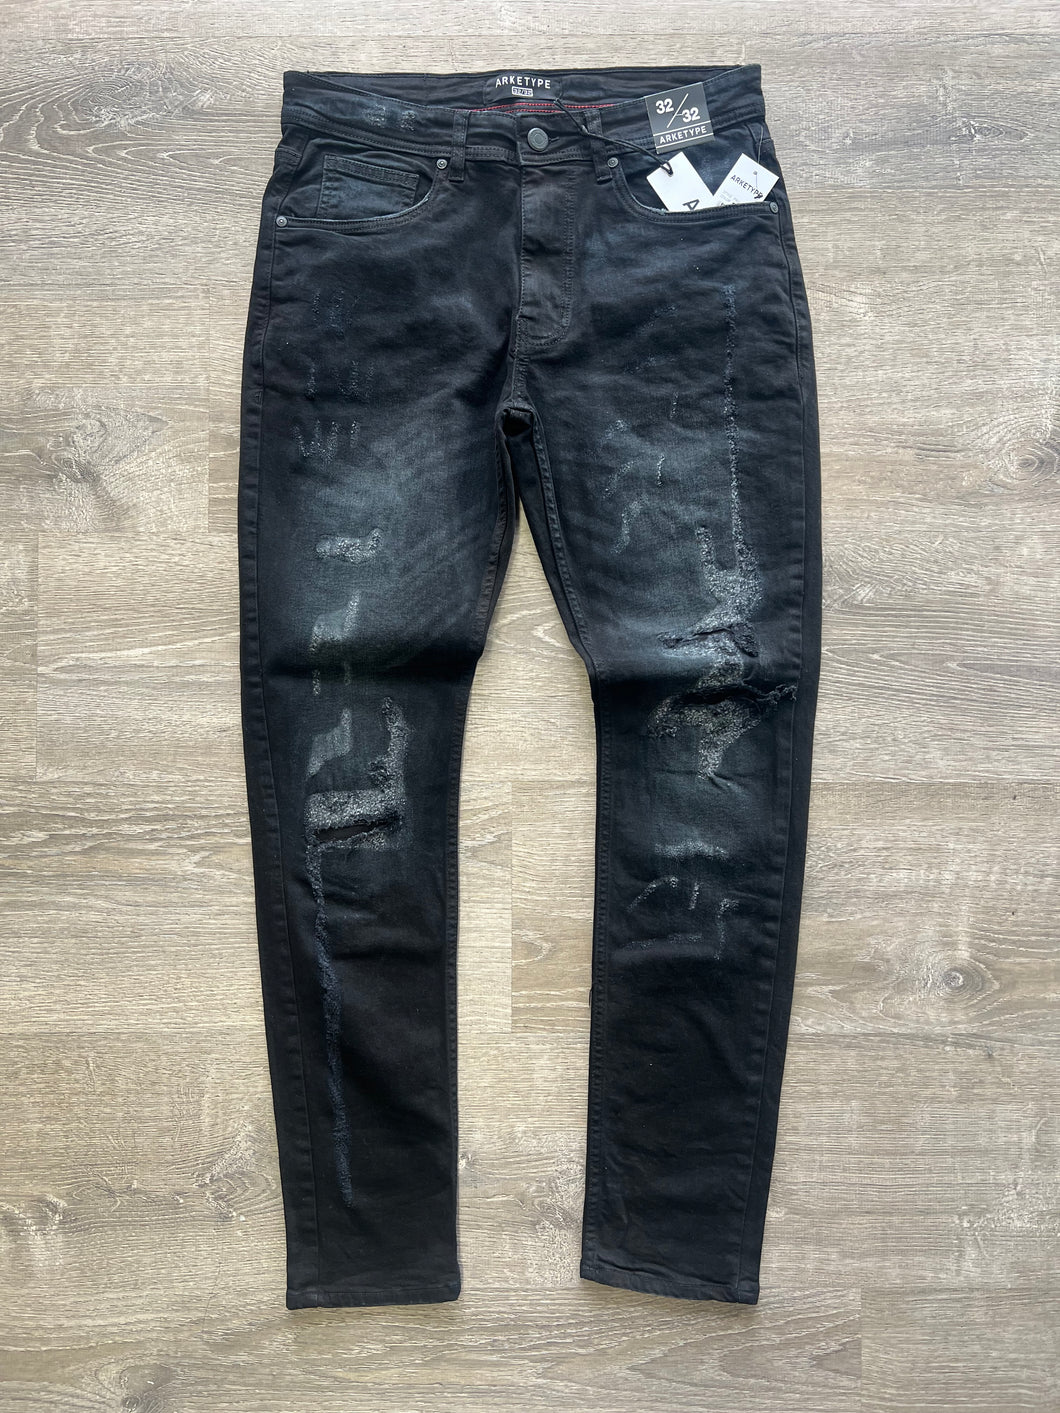 Arketype Jeans P401 - Black